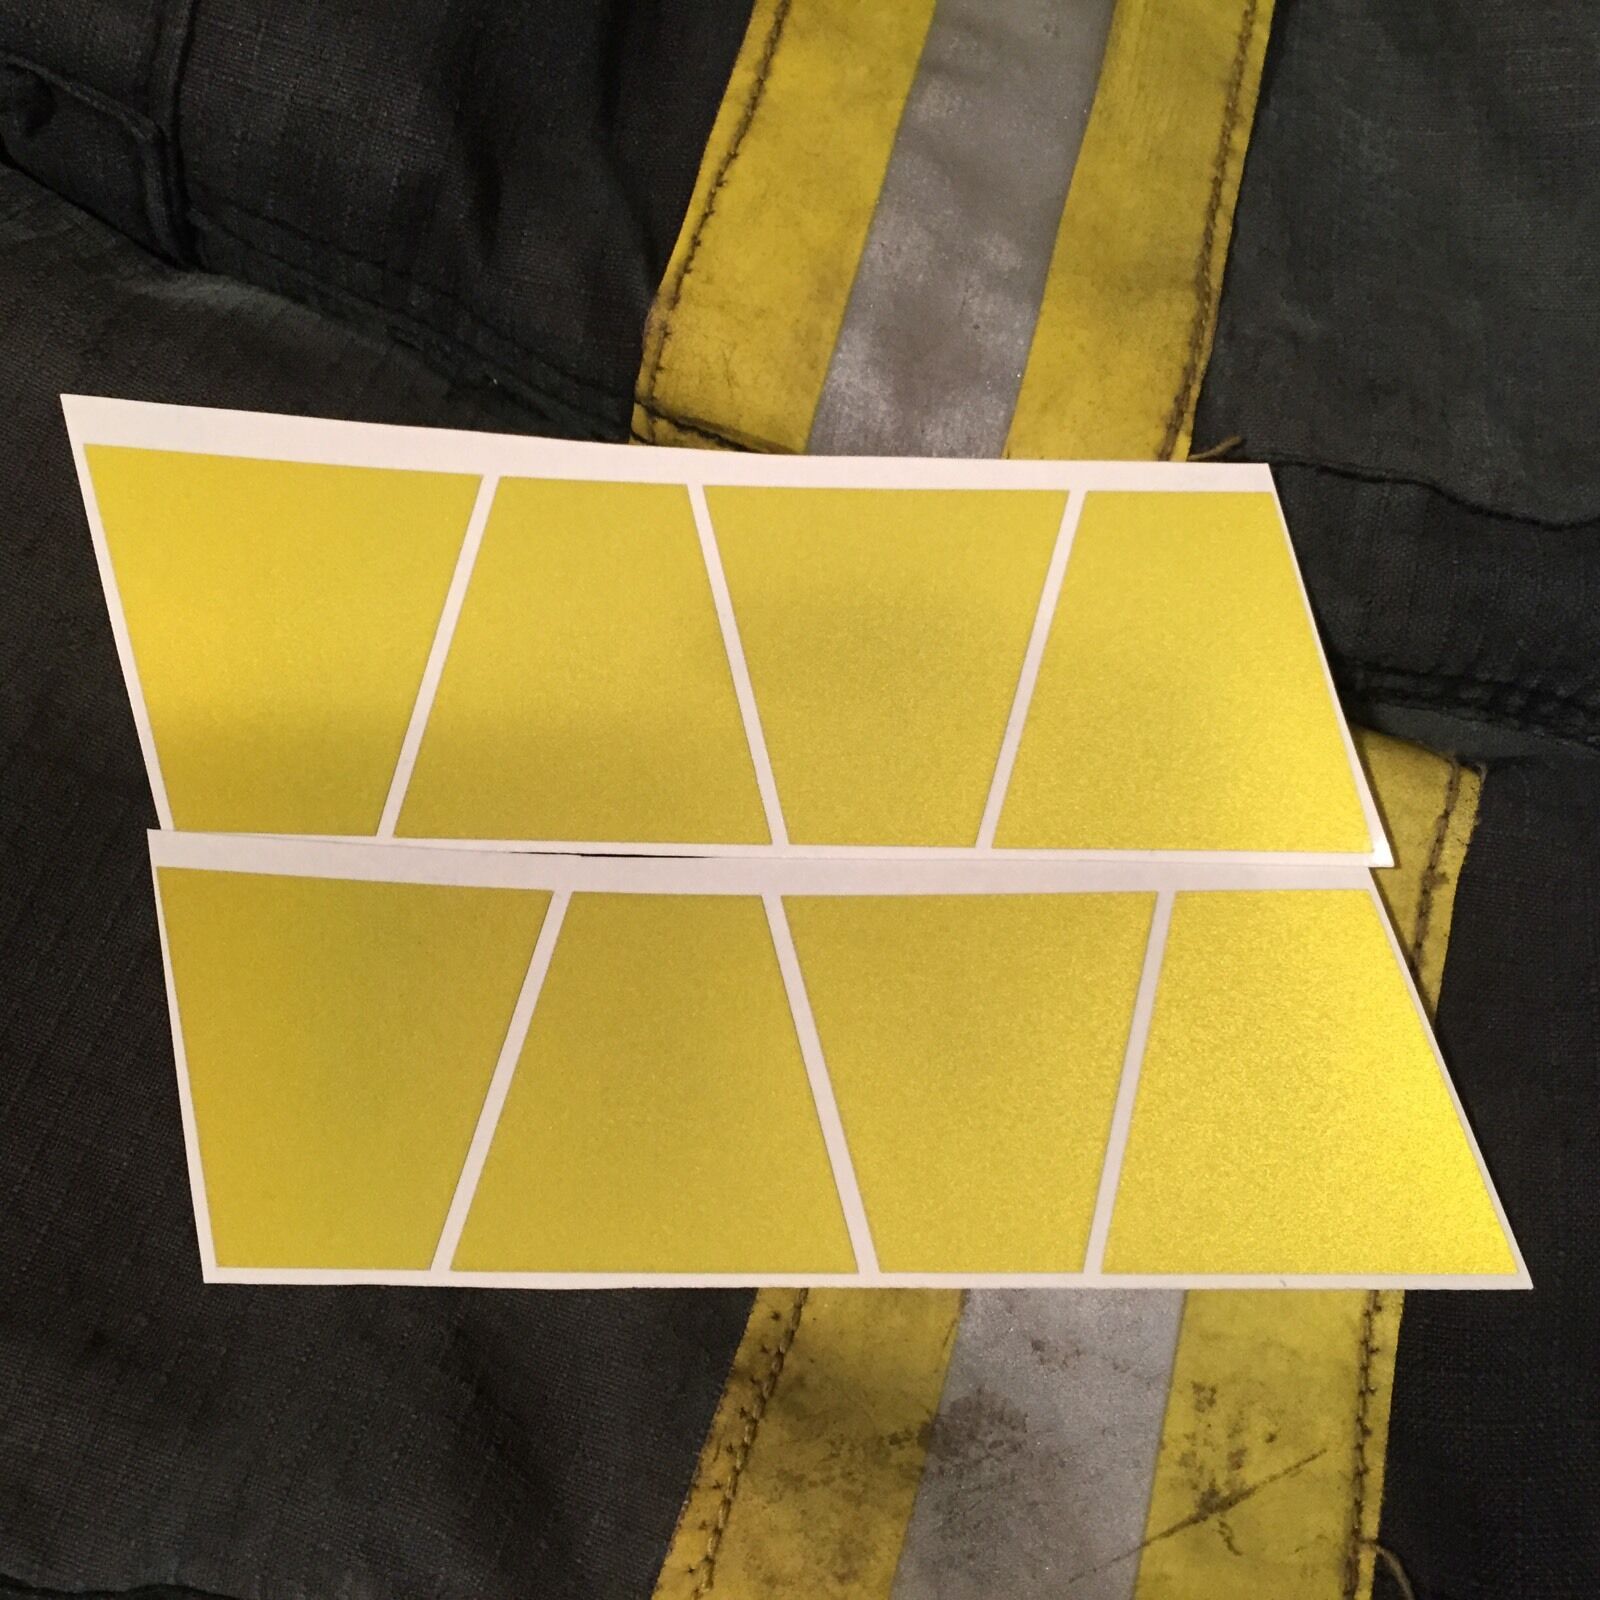 Reflective Fire Helmet Tets 8 Pack Tetrahedrons Fire Helmet Stickers --yellow